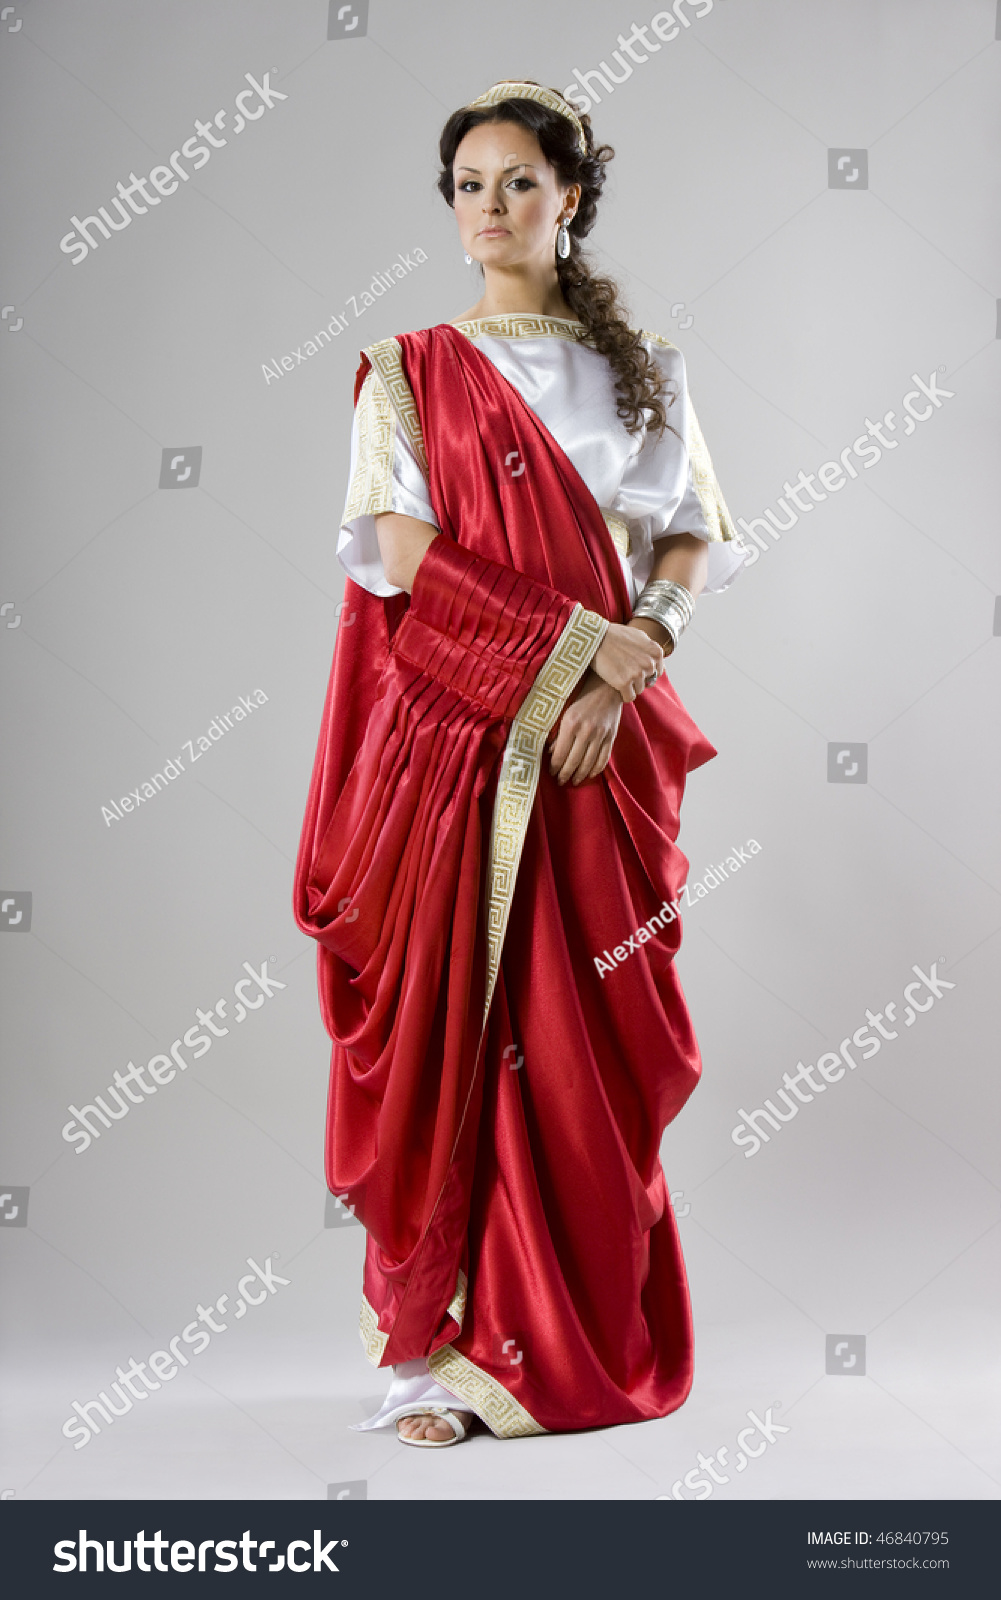 stock-photo-neo-classical-women-like-goddess-in-roman-clothing-46840795.jpg